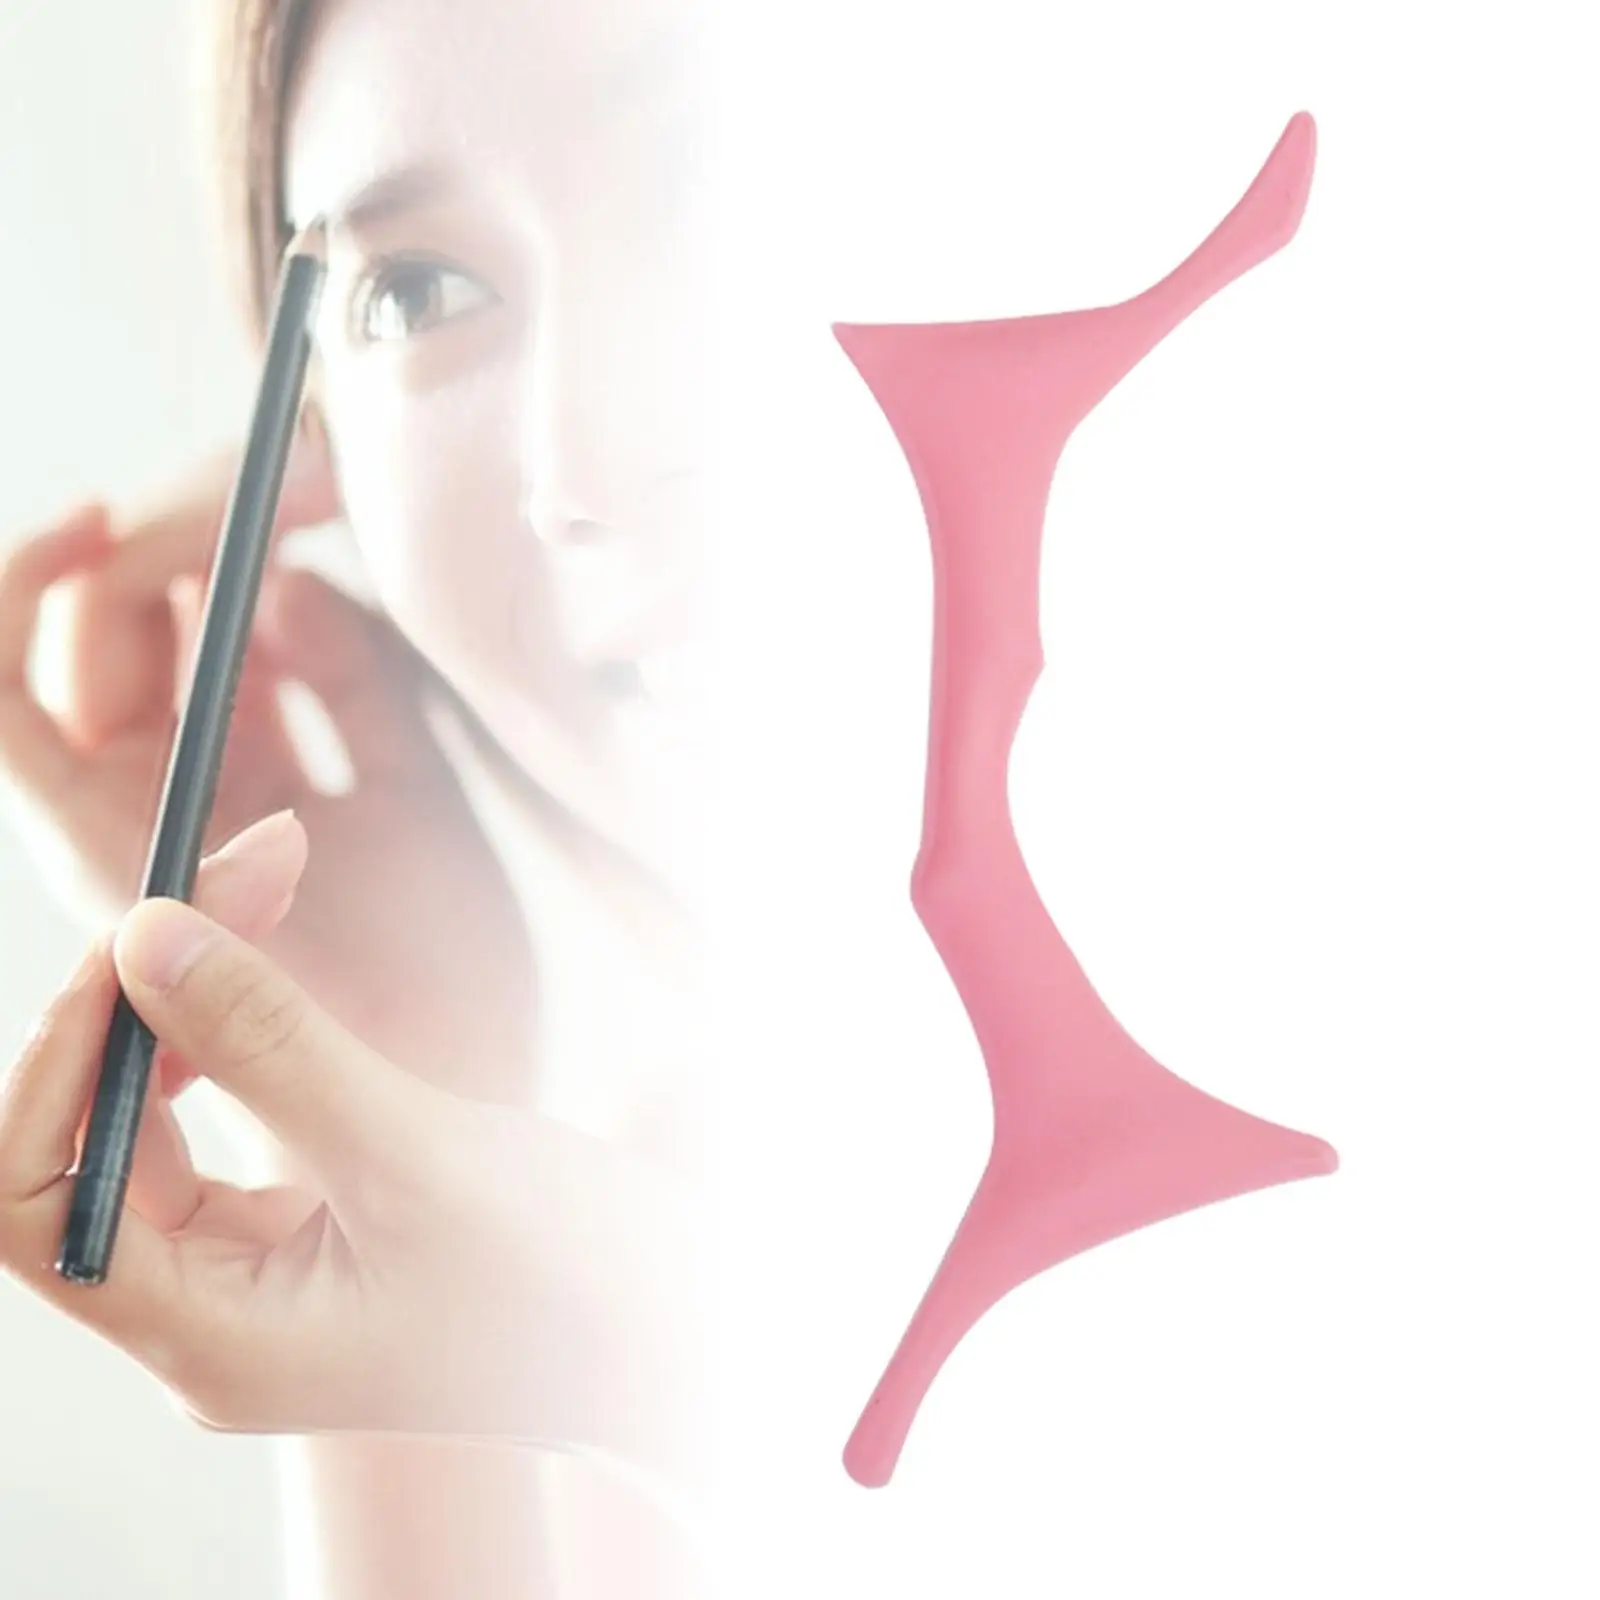 Silicone Eyeshadow Stencil Eyeliner Aid Tool Multifunctional for Beginners